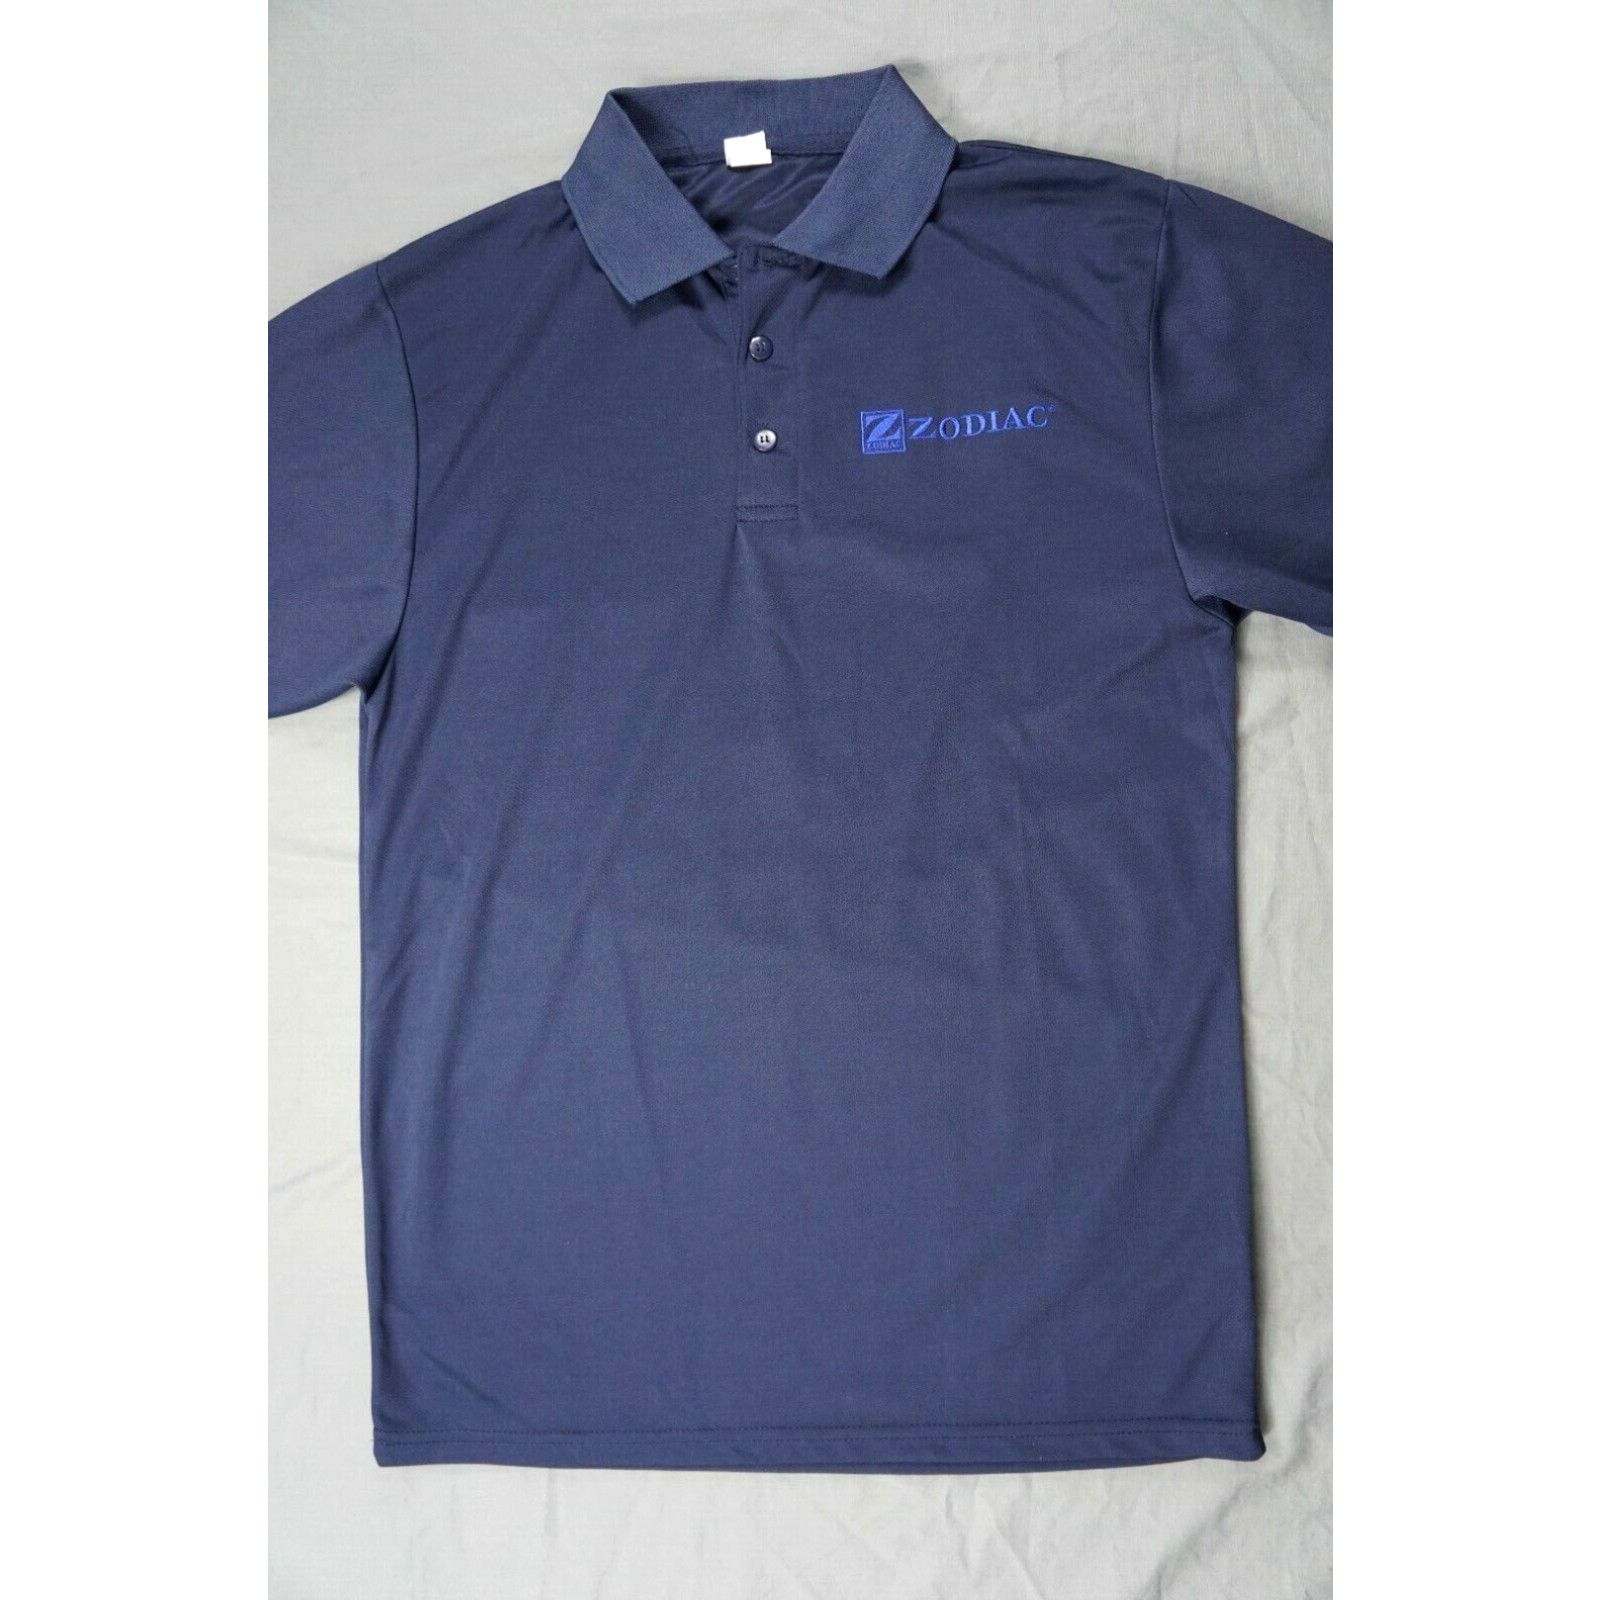 Dunbrooke Dunbrooke Premium Polo Golf Shirt. Zodiac Stitched. Navy Blue, Men's S. EUC!! Size US S / EU 44-46 / 1 - 2 Preview